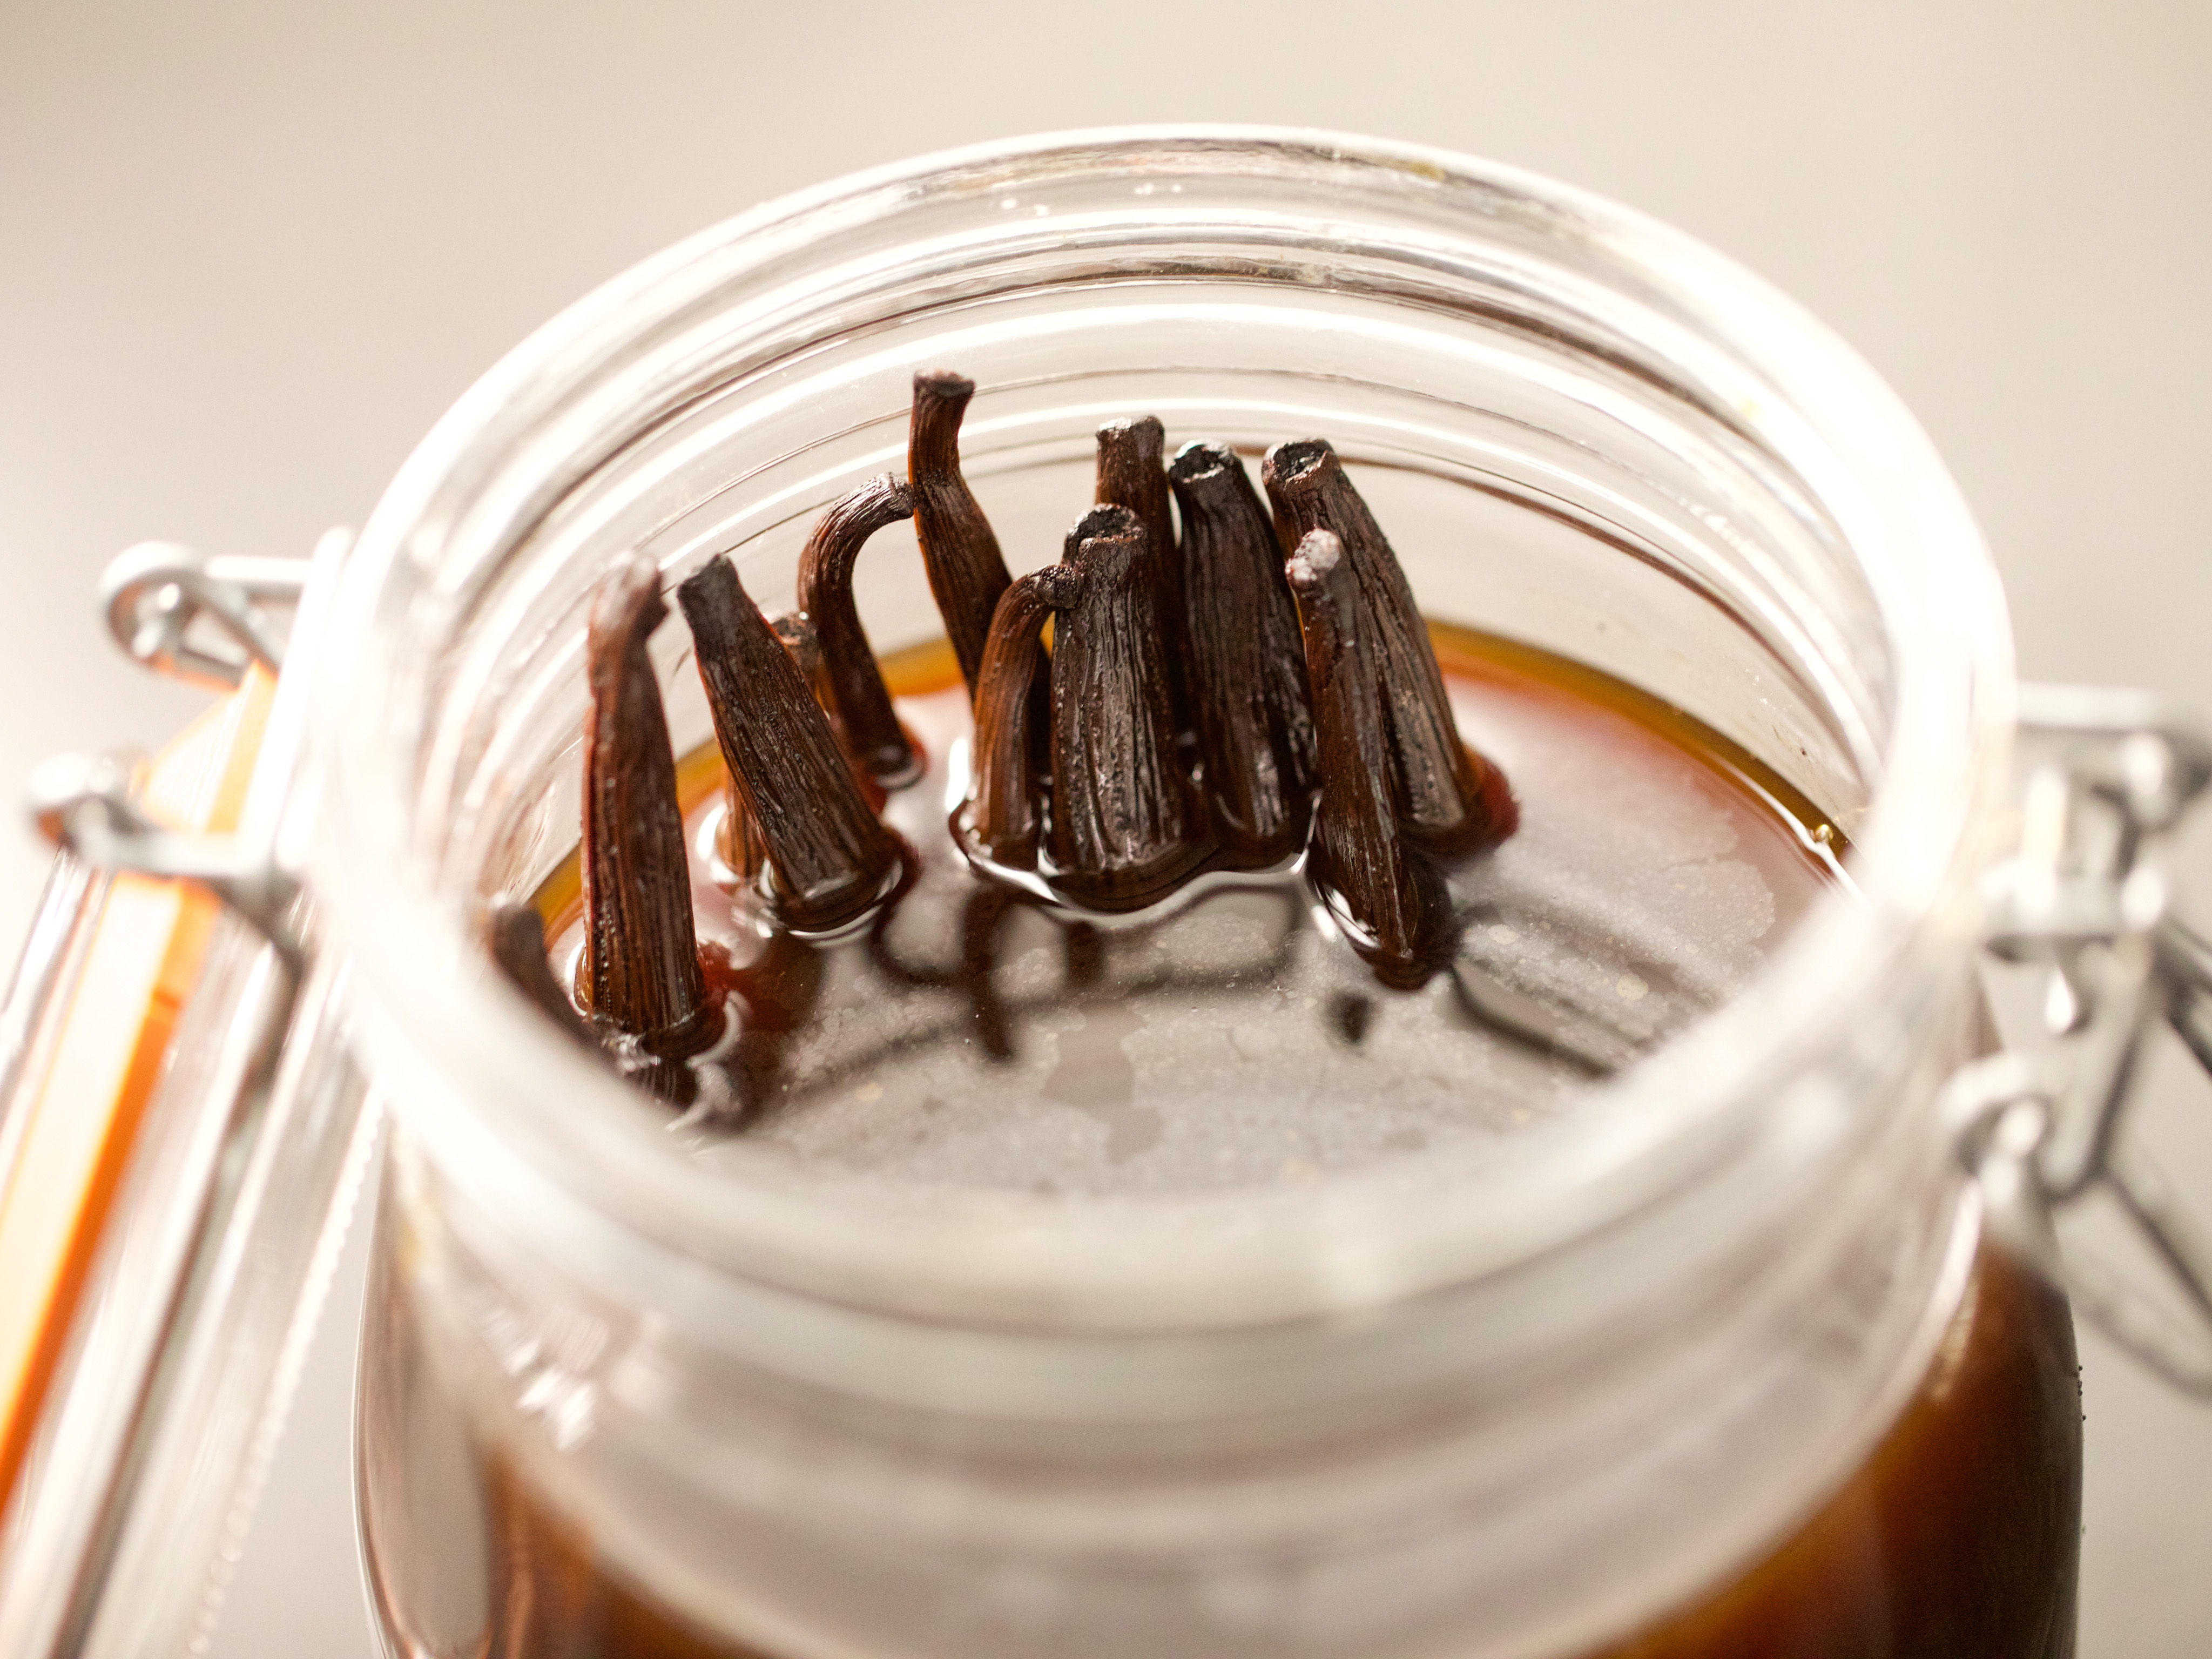 How to Make Homemade Vanilla Extract